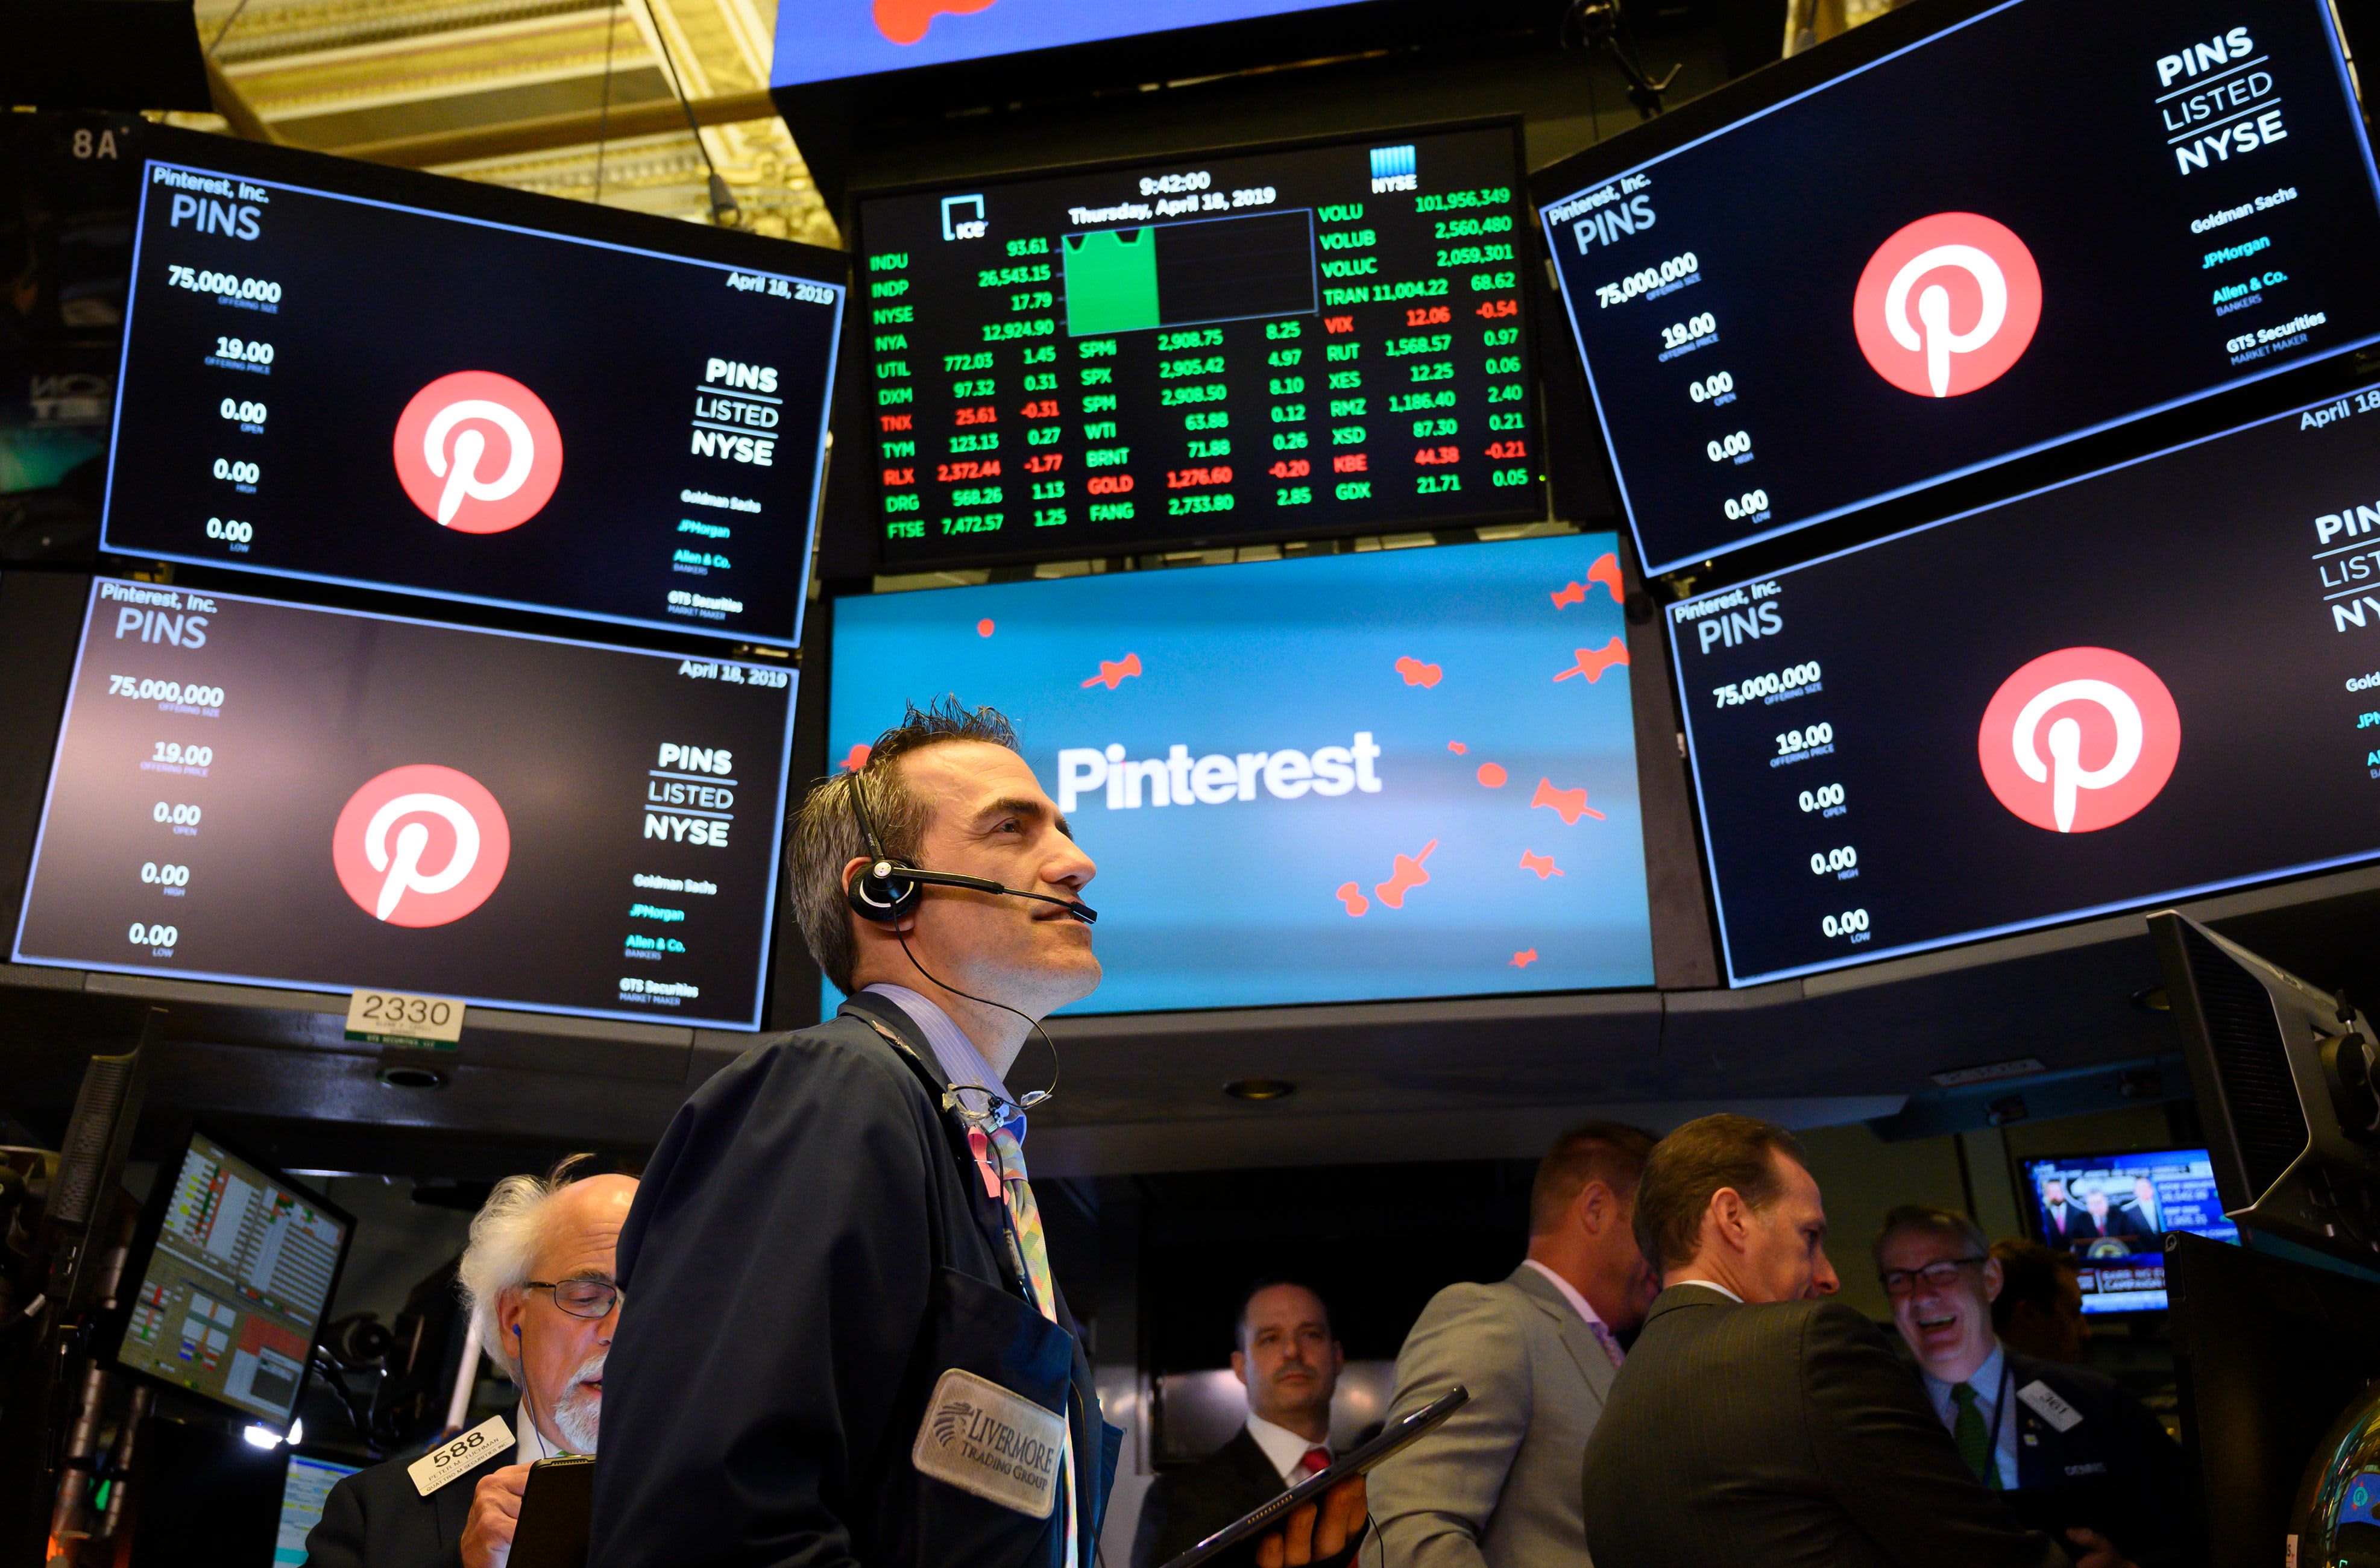 Pinterest dips 10% to new 52-week low on Guggenheim downgrade